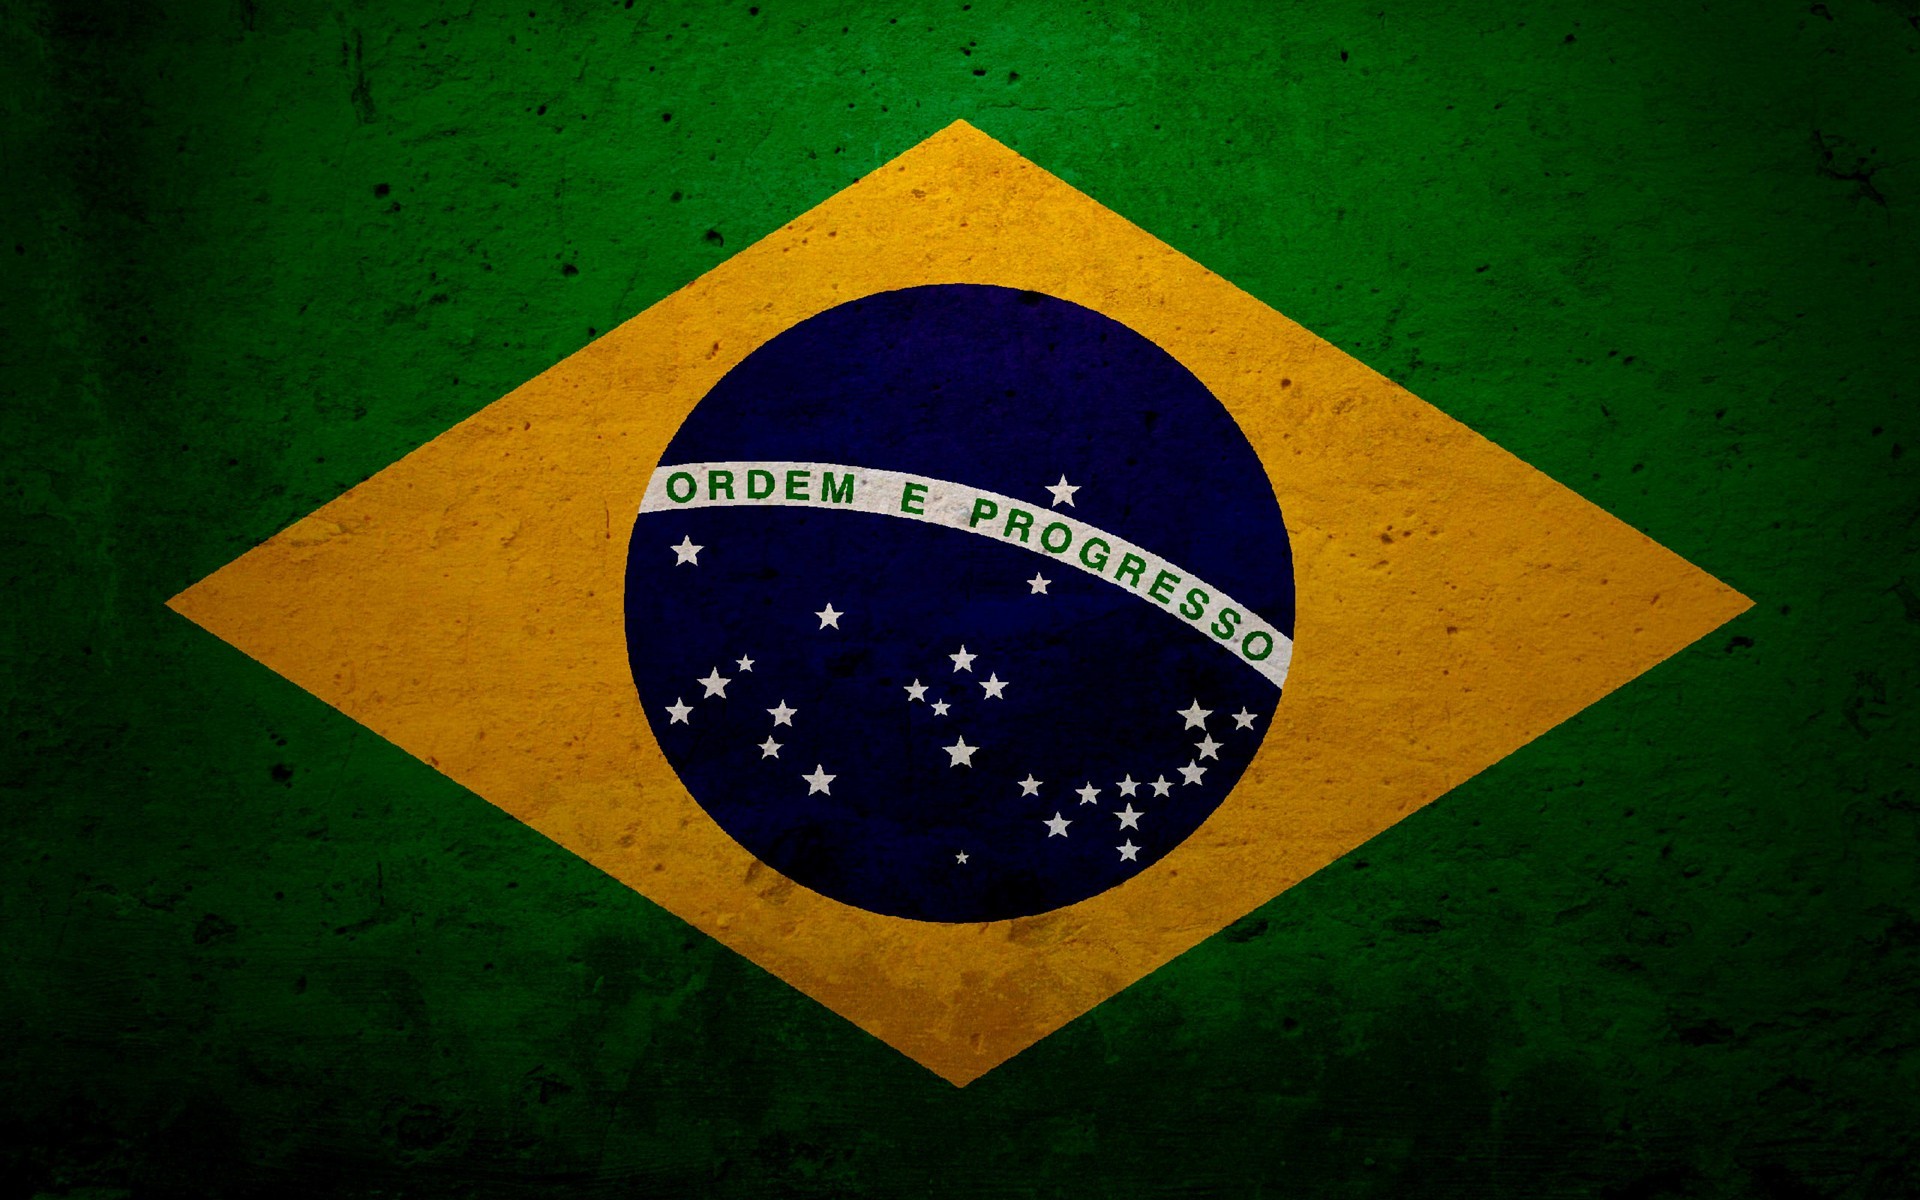 General 1920x1200 Brazil green background flag green stars yellow quote dark grunge blue sphere digital art Brazilian Flag